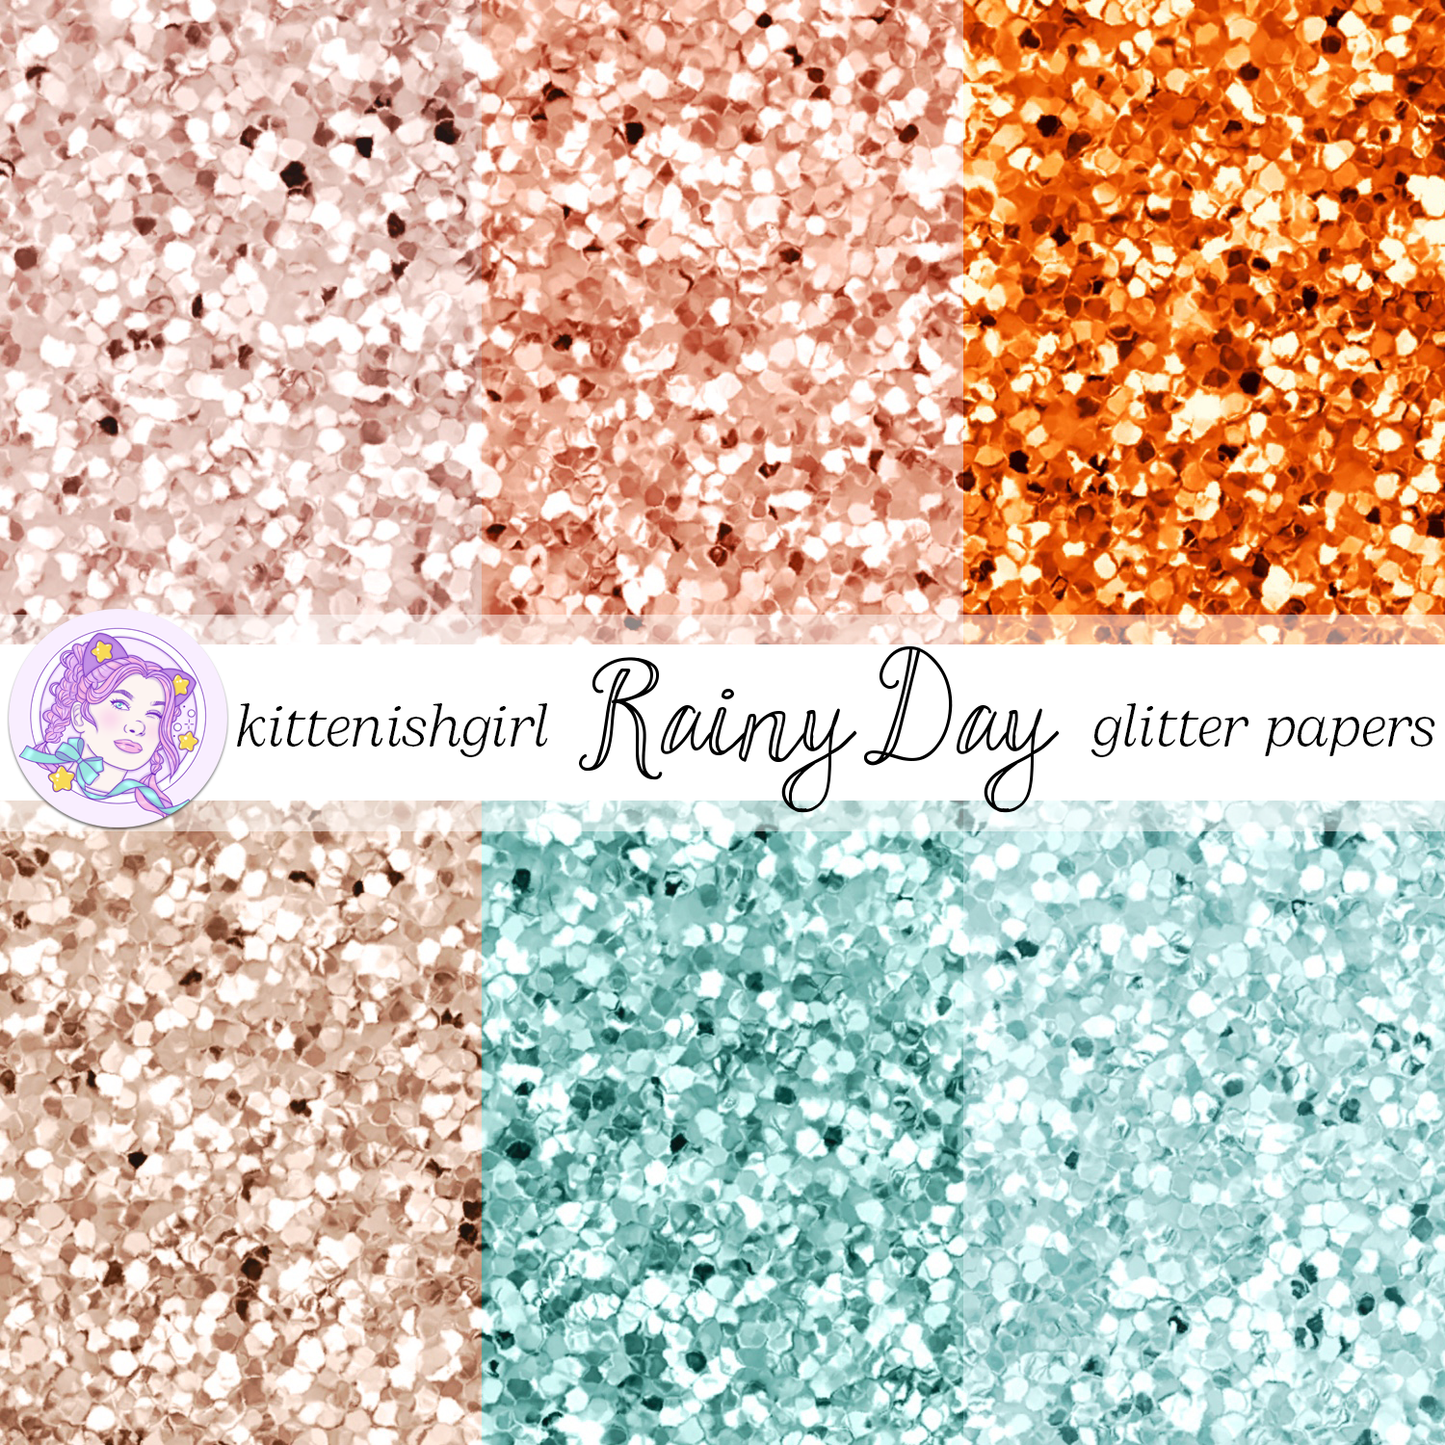 raining glitter